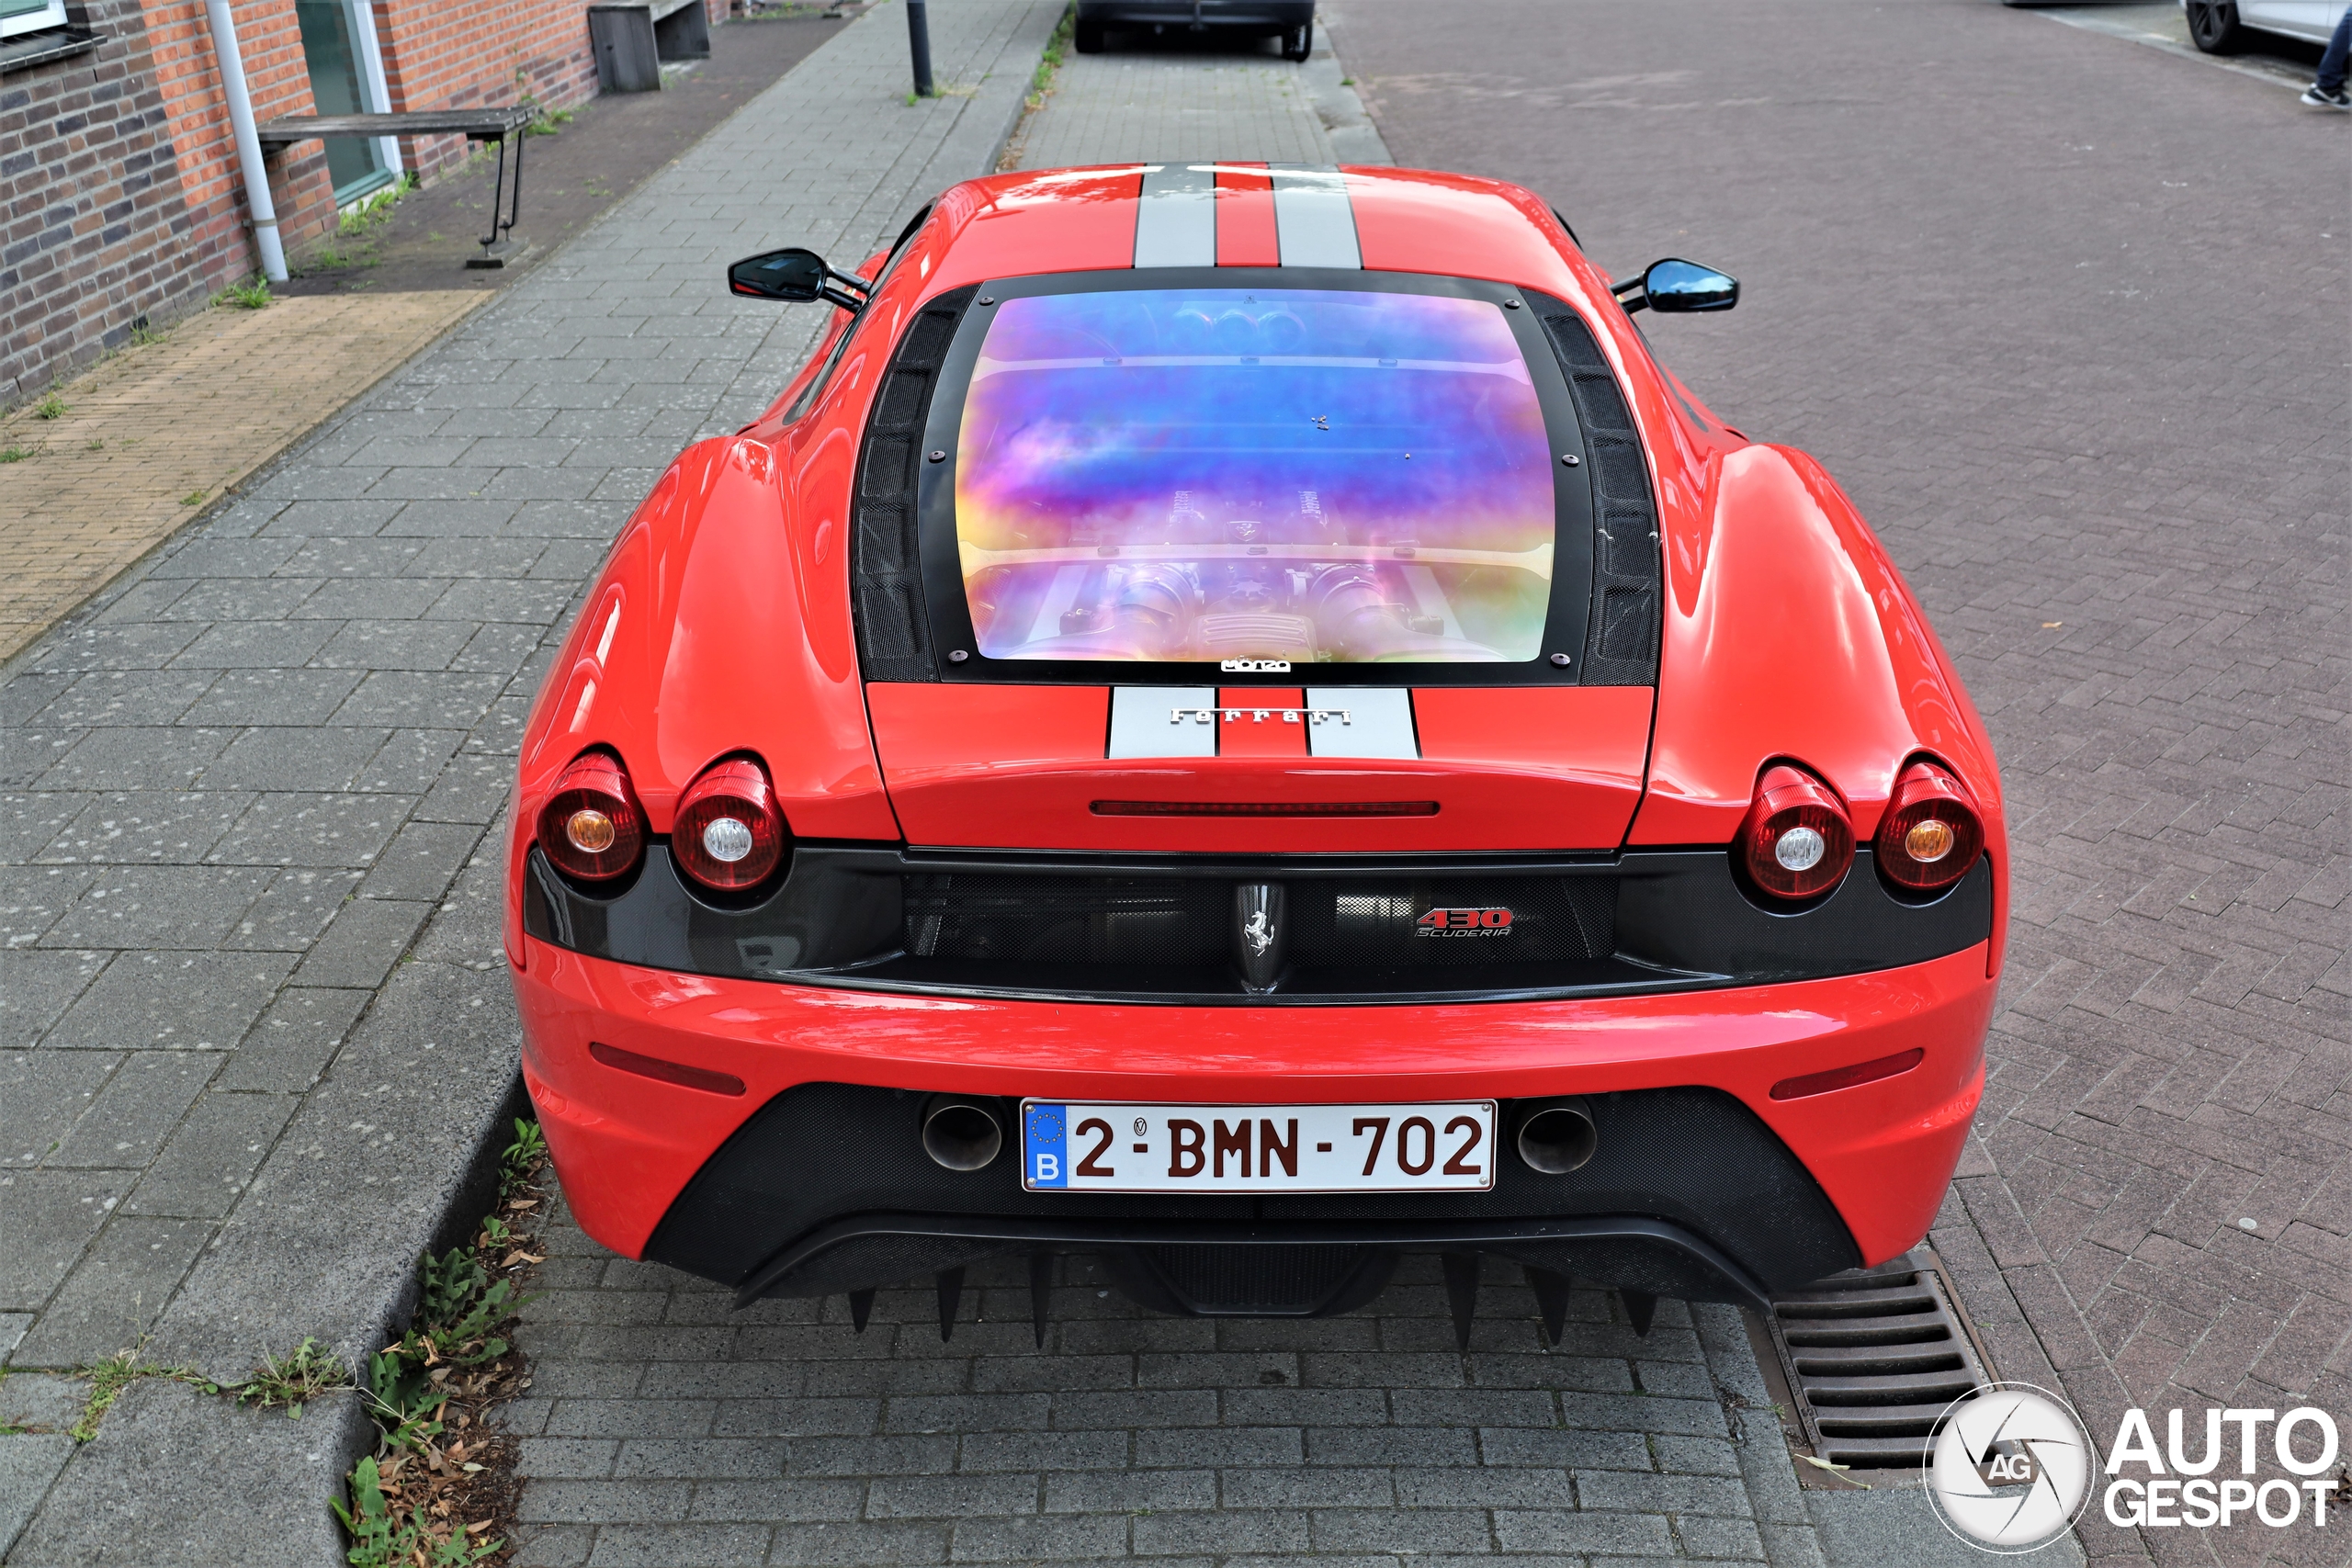 Hete Ferrari 430 Scuderia vleurt vinex wijk op